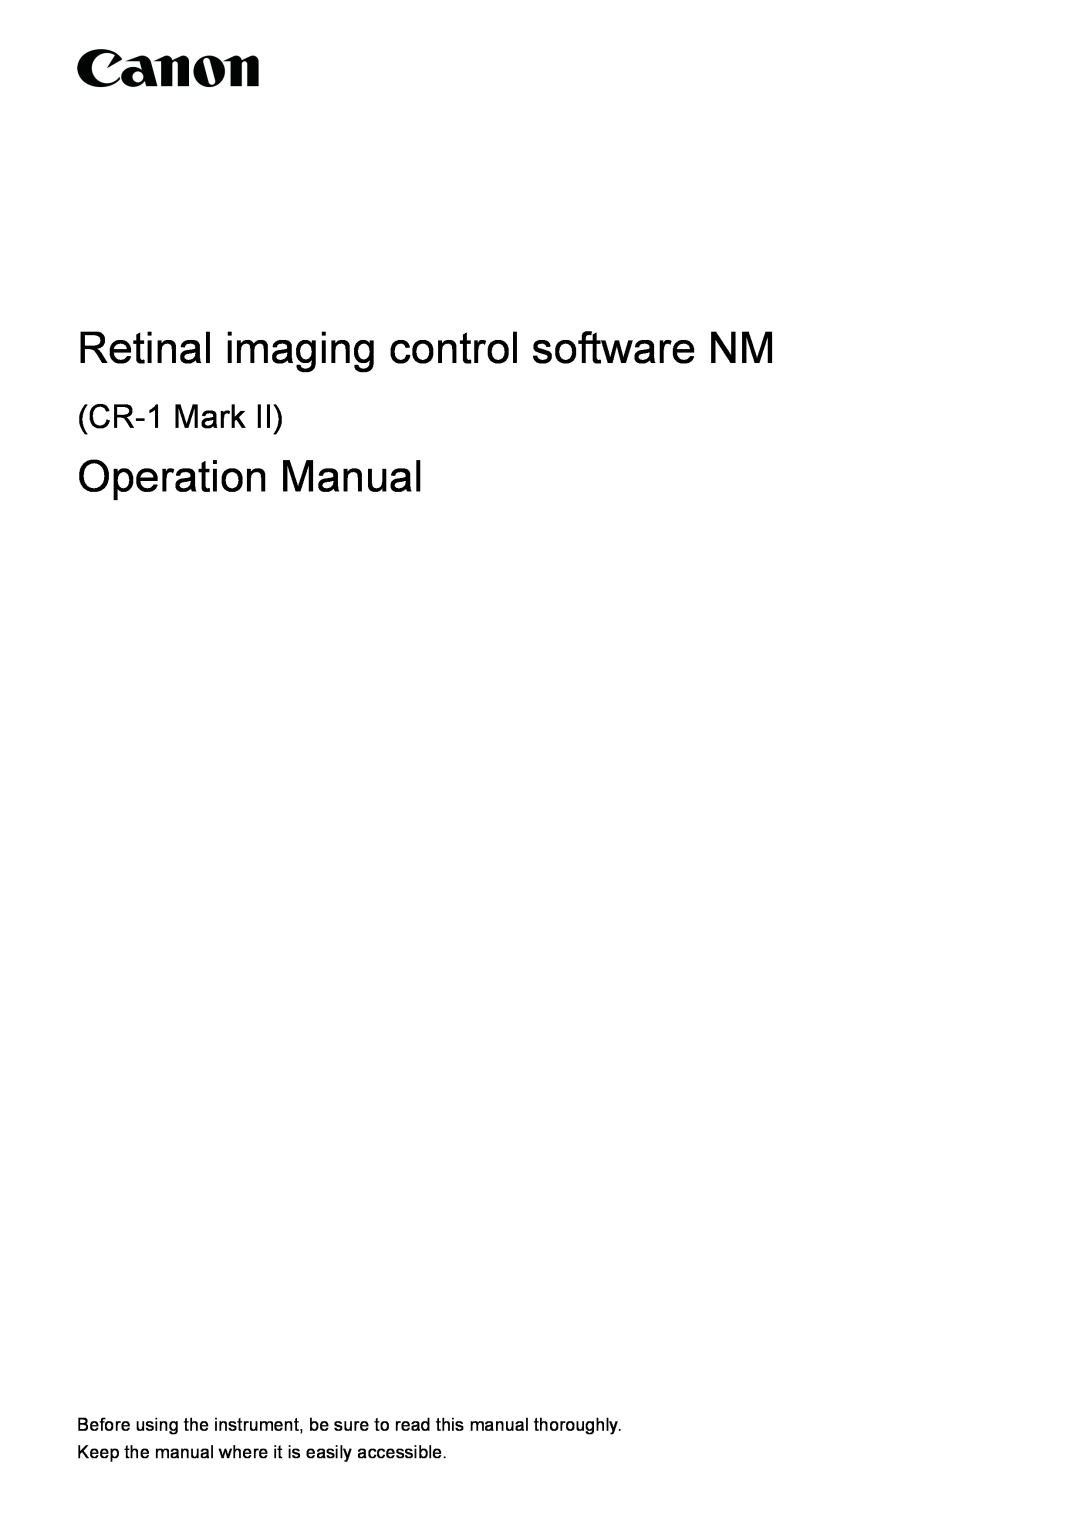 Canon CR-1 MARK II operation manual CR-1 Mark, Retinal imaging control software NM, Operation Manual 